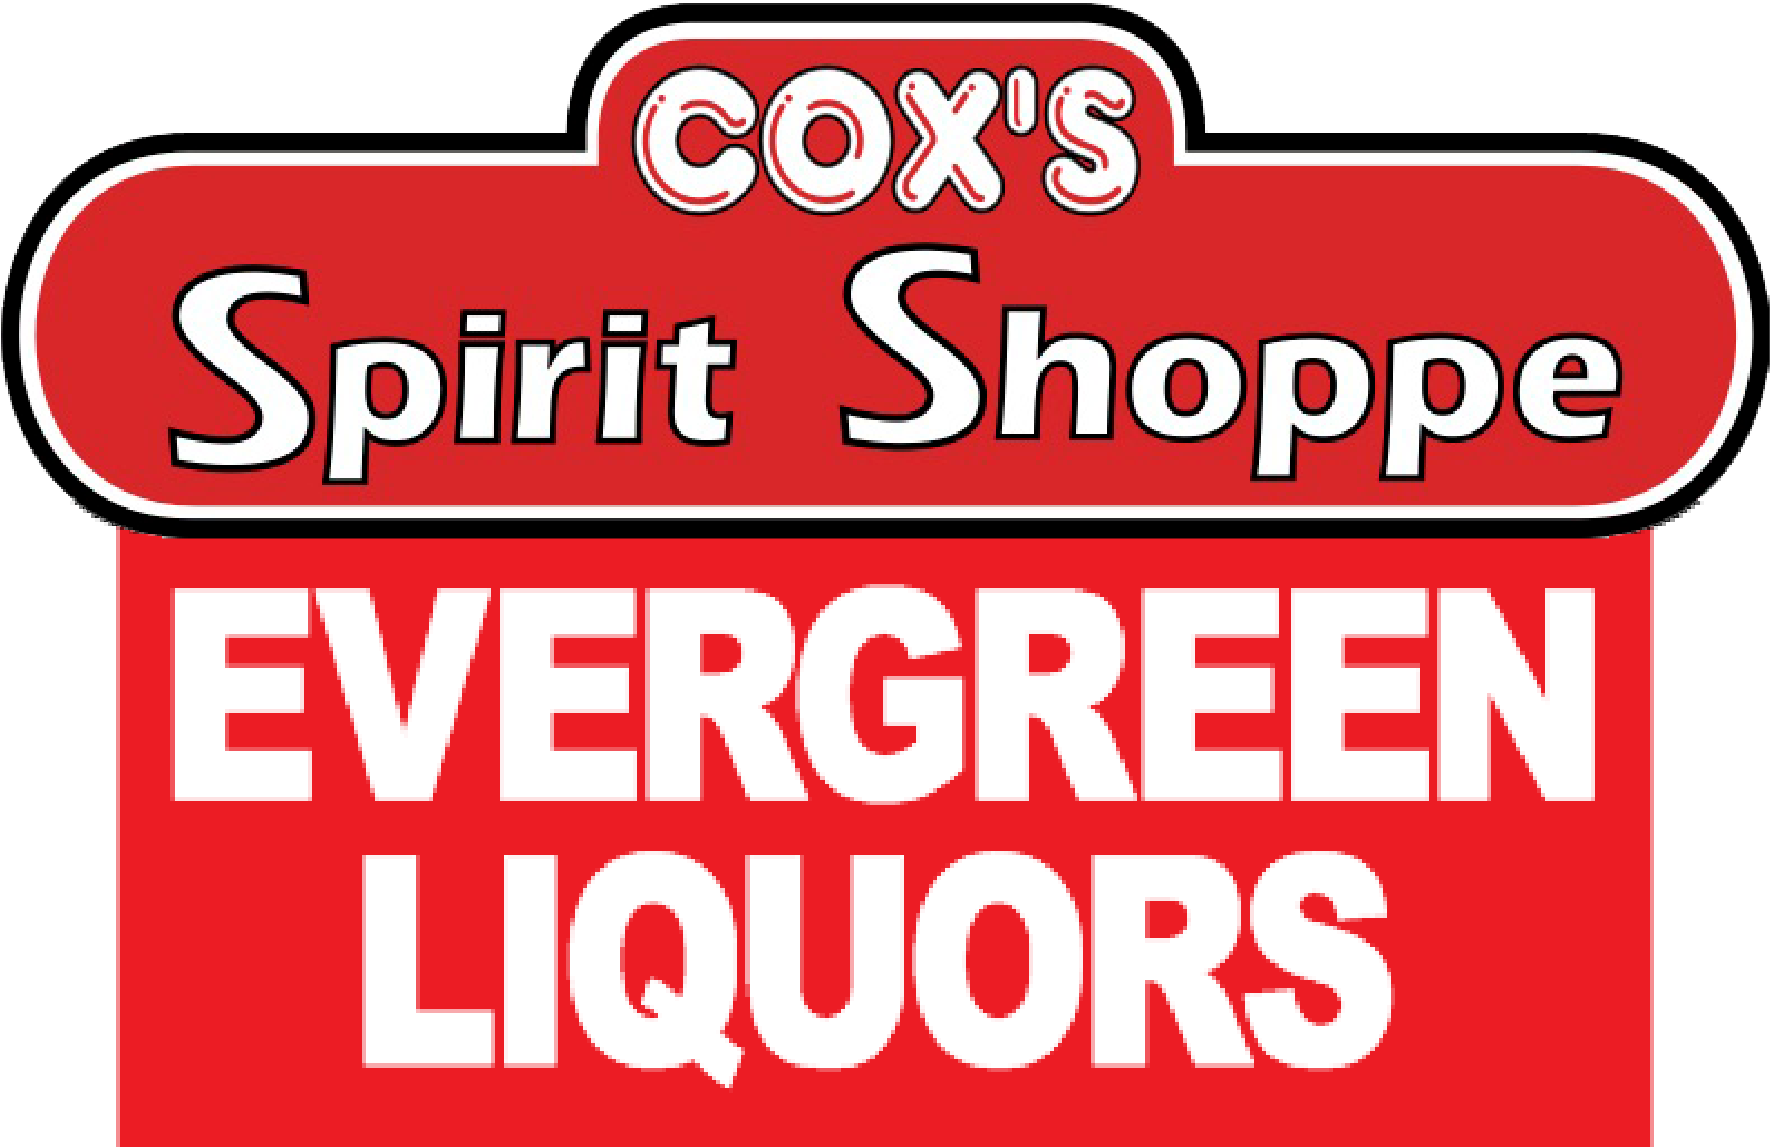 Cox's & Evergreen Liquors Bottle Signing - NBA2Lou